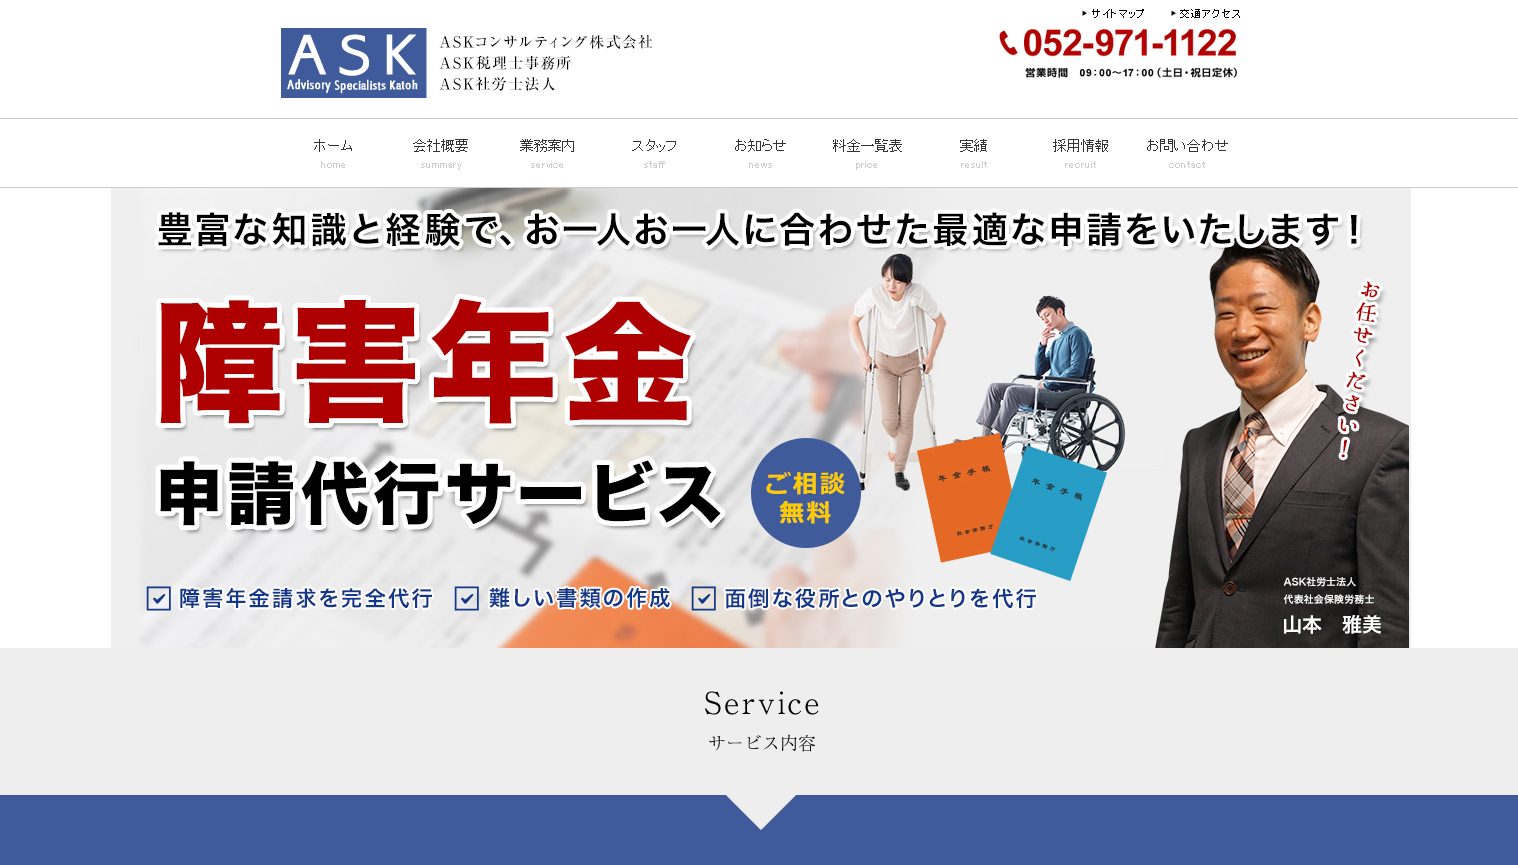 ASKコンサルティング株式会社のASKコンサルティング株式会社サービス